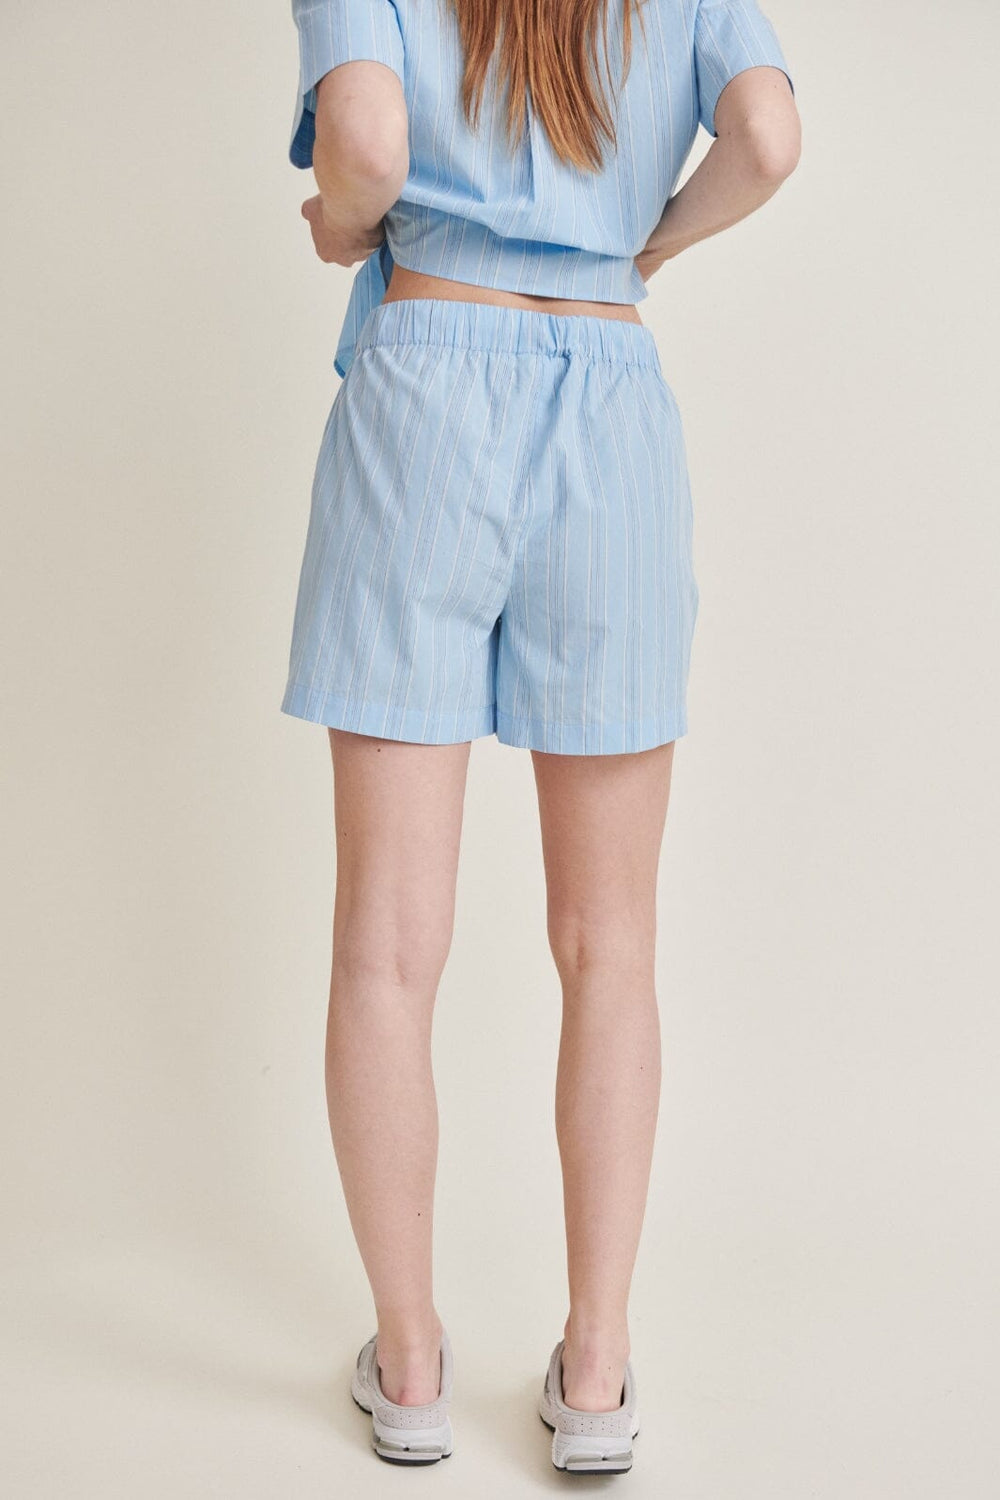 Basic Apparel - Marina Shorts - 679 Airy Blue / Lotus / Birch / Classic Blue Shorts 